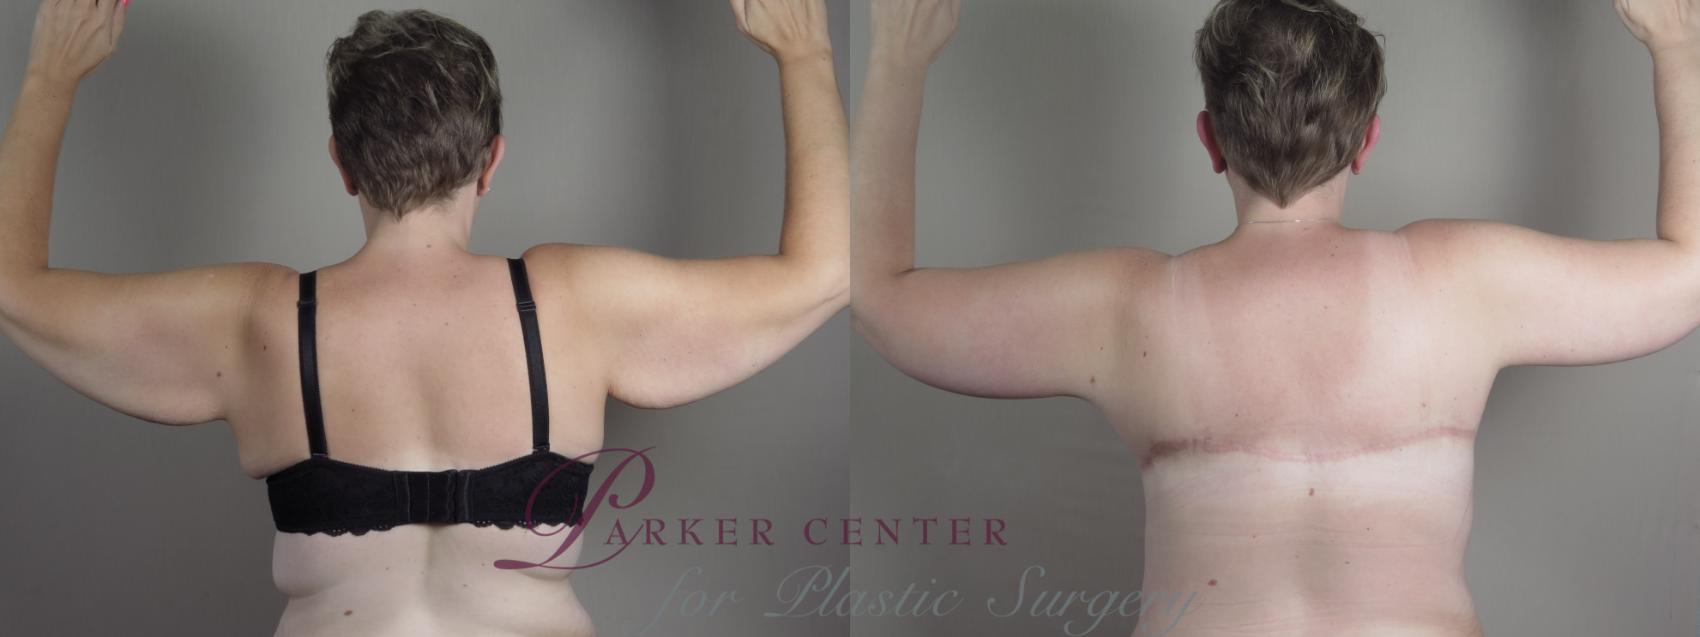 Upper Arm Rejuvenation Case 1320 Before & After Back | Paramus, NJ | Parker Center for Plastic Surgery